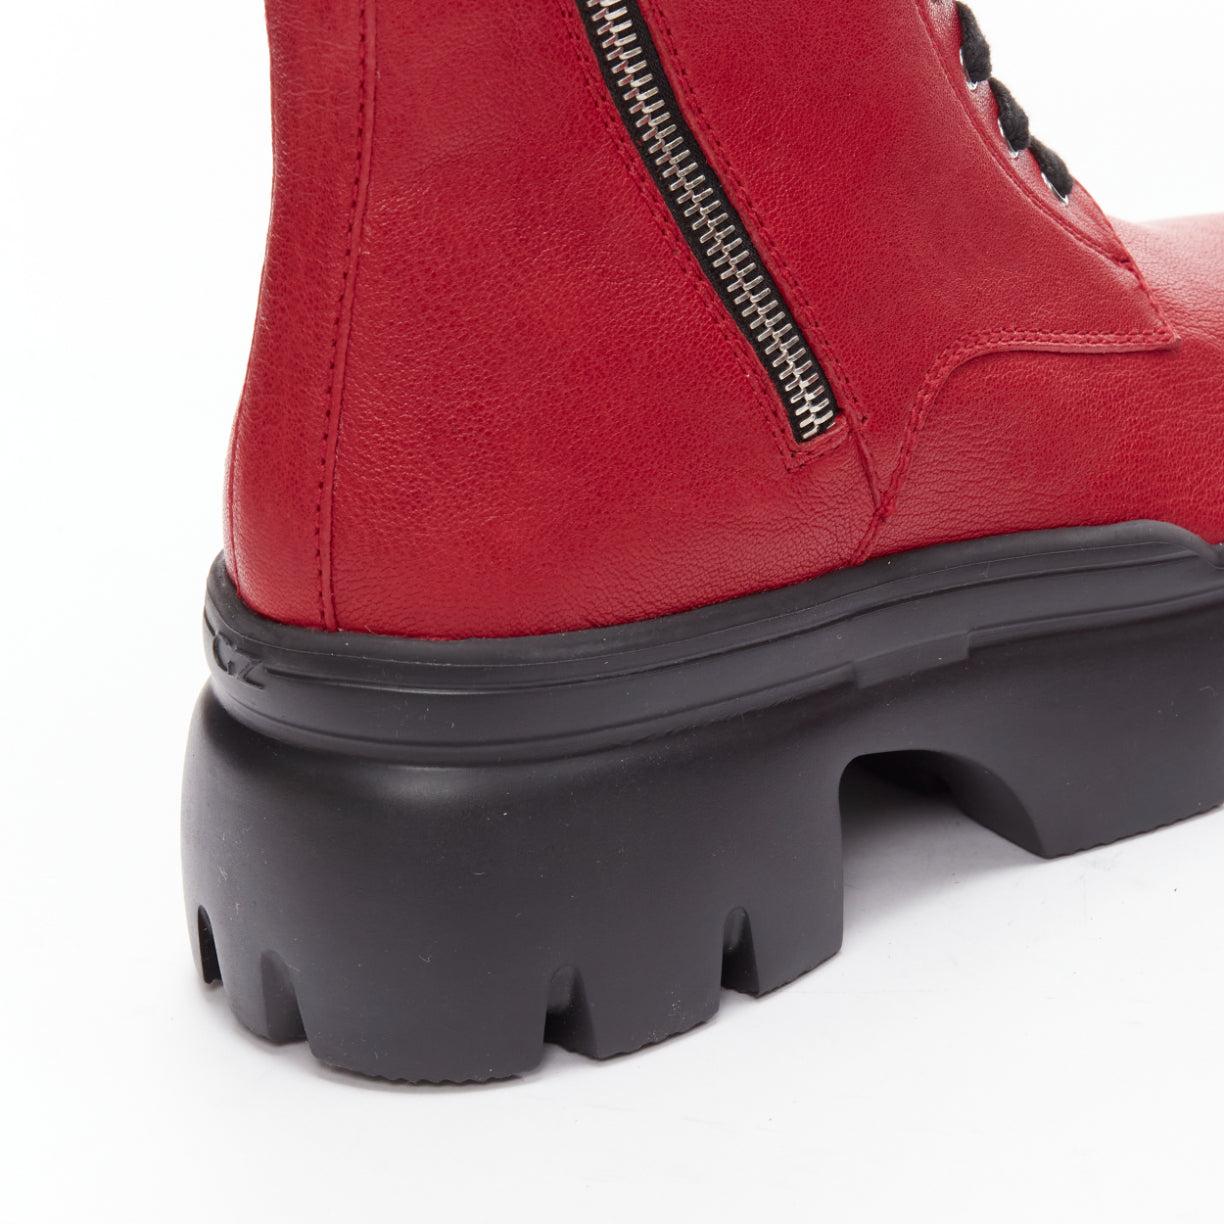 GIUSEPPE ZANOTTI Apocalypse red leather side zip combat boots EU39 For Sale 4